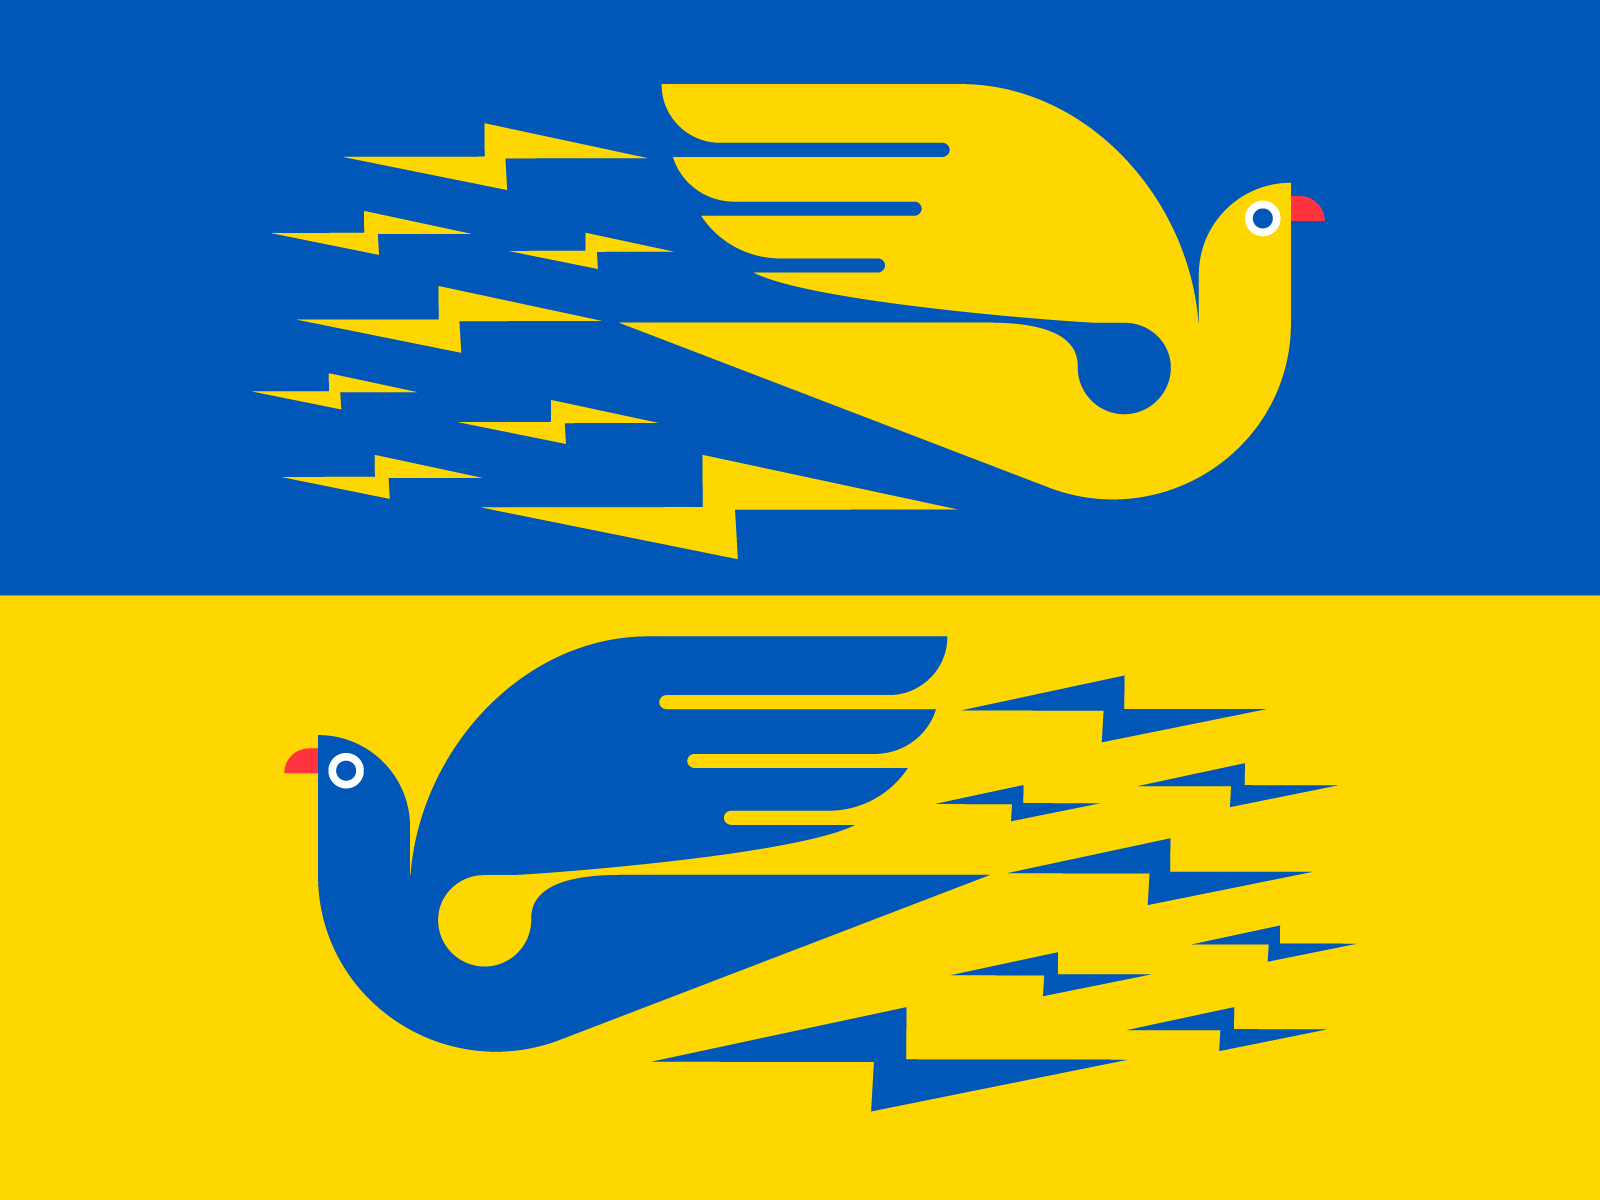 When doves become Javelins. design illustration neversurrender no war slavaukraini standwithukraine ukraine warcrime